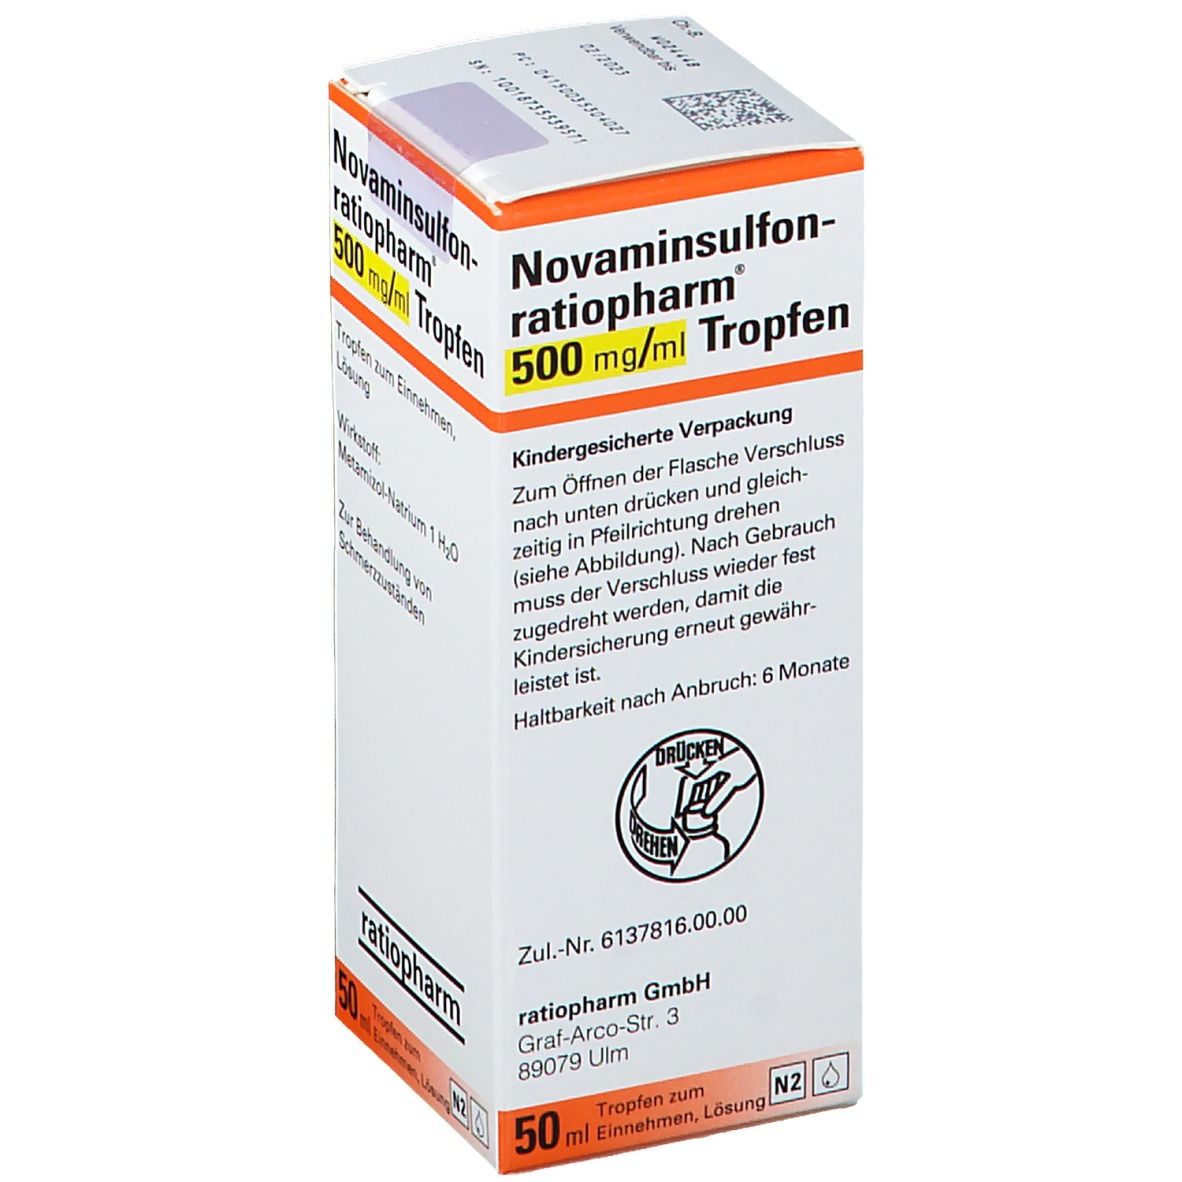 Novaminsulfon-ratiopharm ® 500 mg/ml Tropfen 50 ml - shop-ap